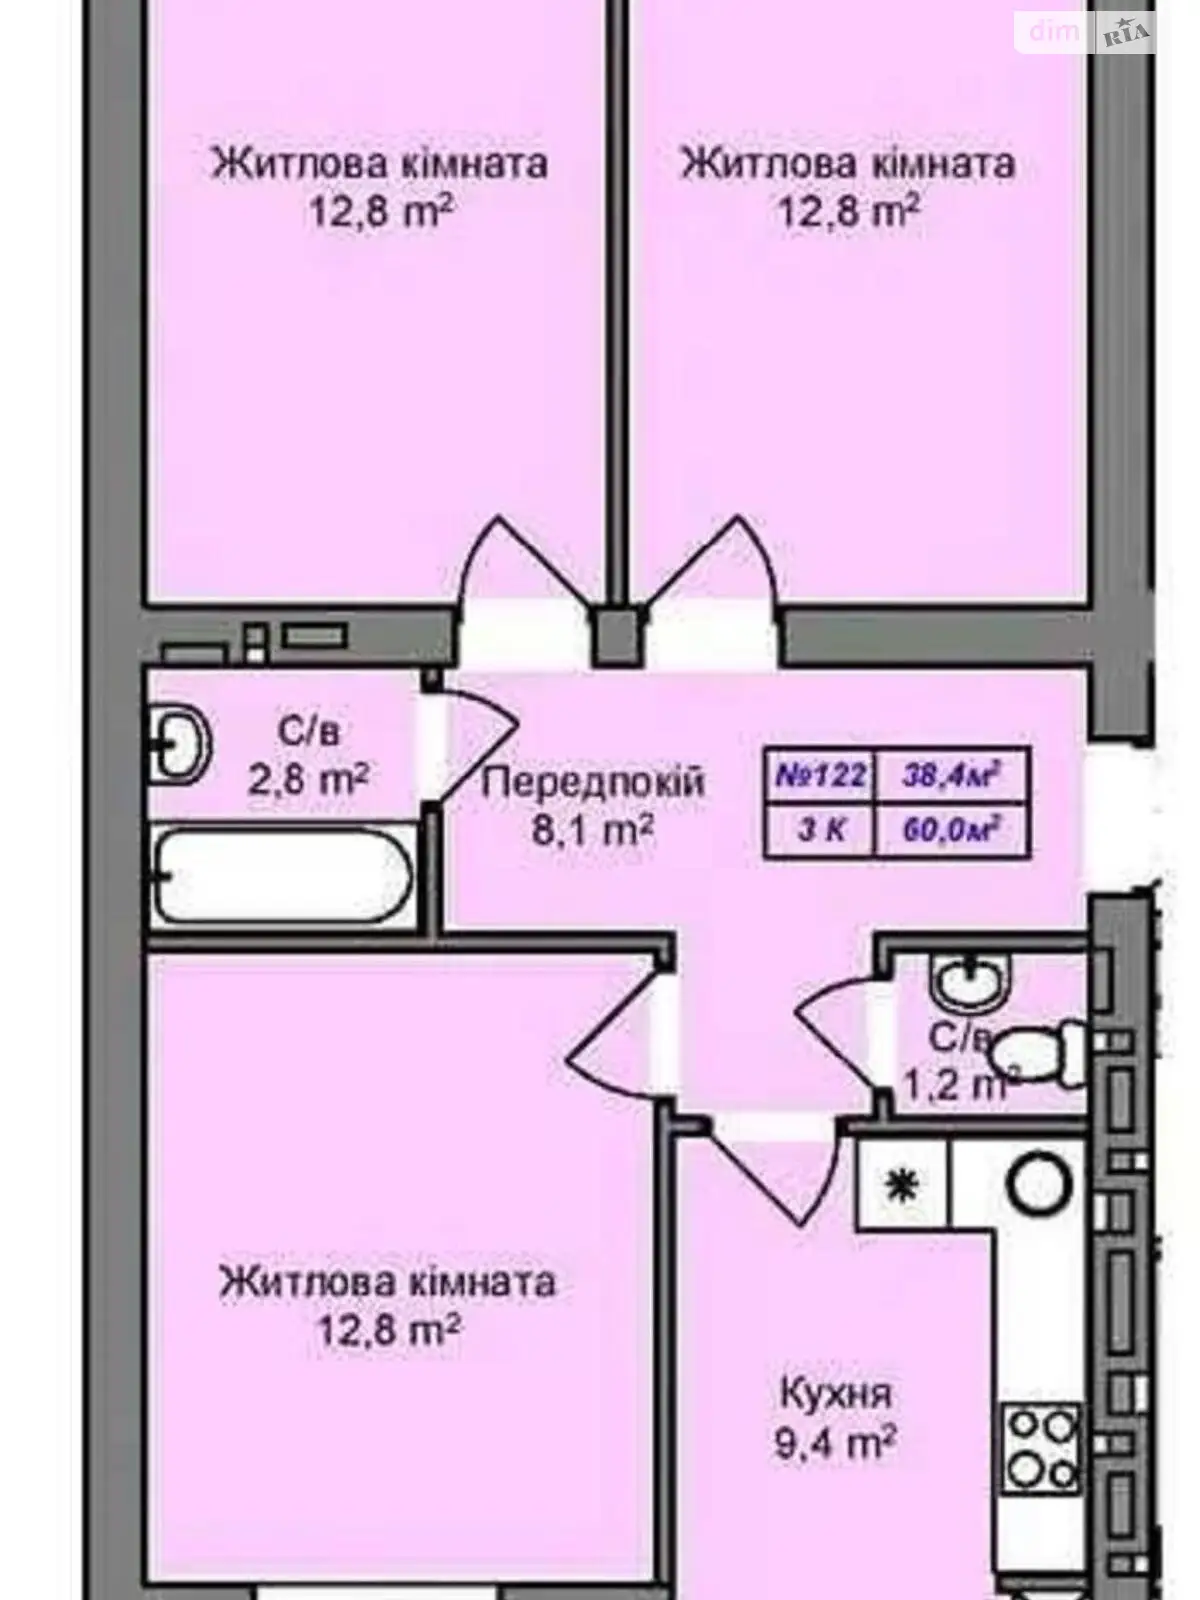 Продается 3-комнатная квартира 60 кв. м в Киево-Святошинске - фото 2